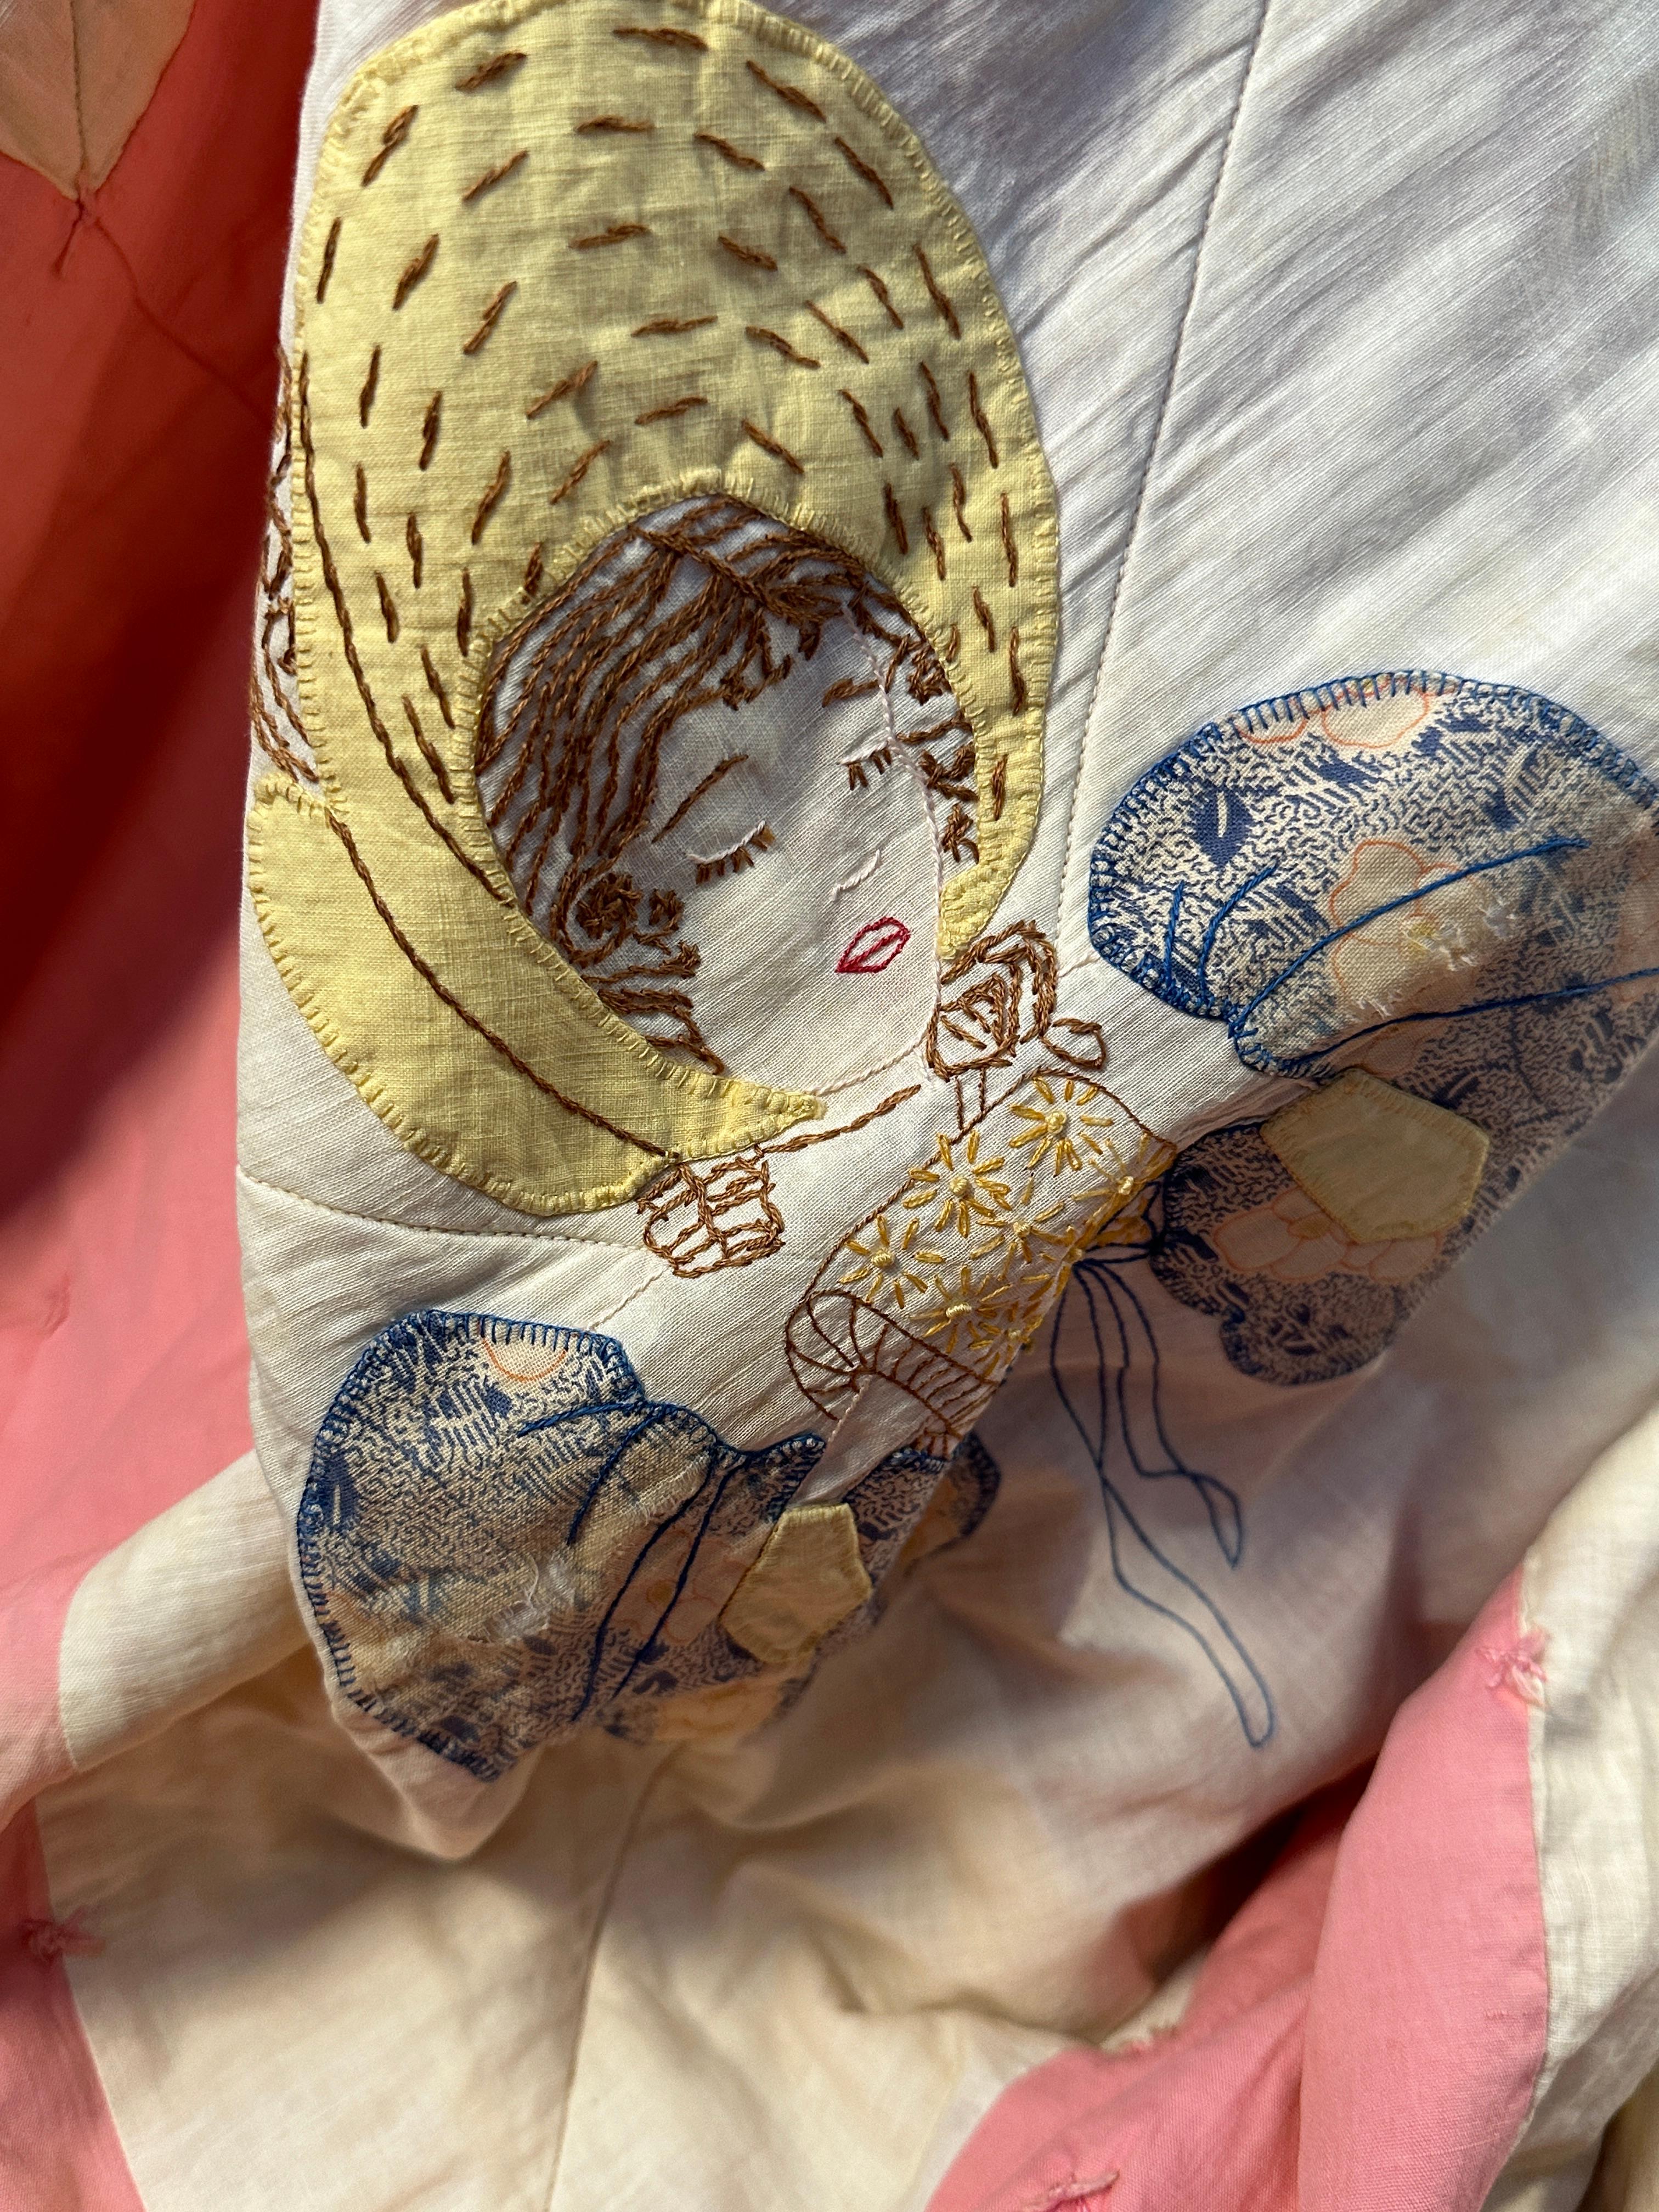 Vintage Embroidered Quilt